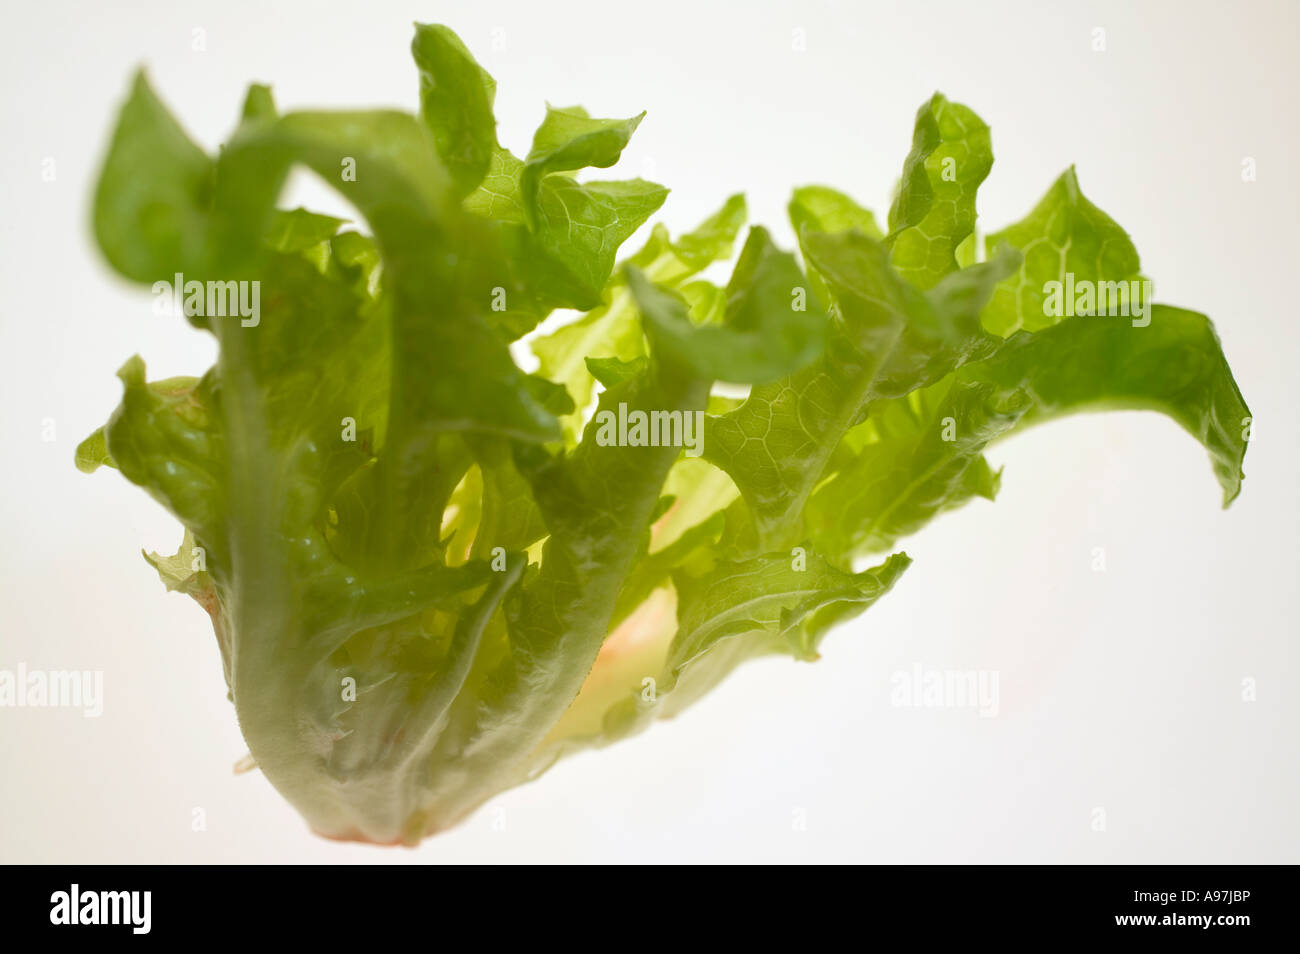 Oak leaf lettuce loose leaf lettuce FoodCollection Stock Photo - Alamy